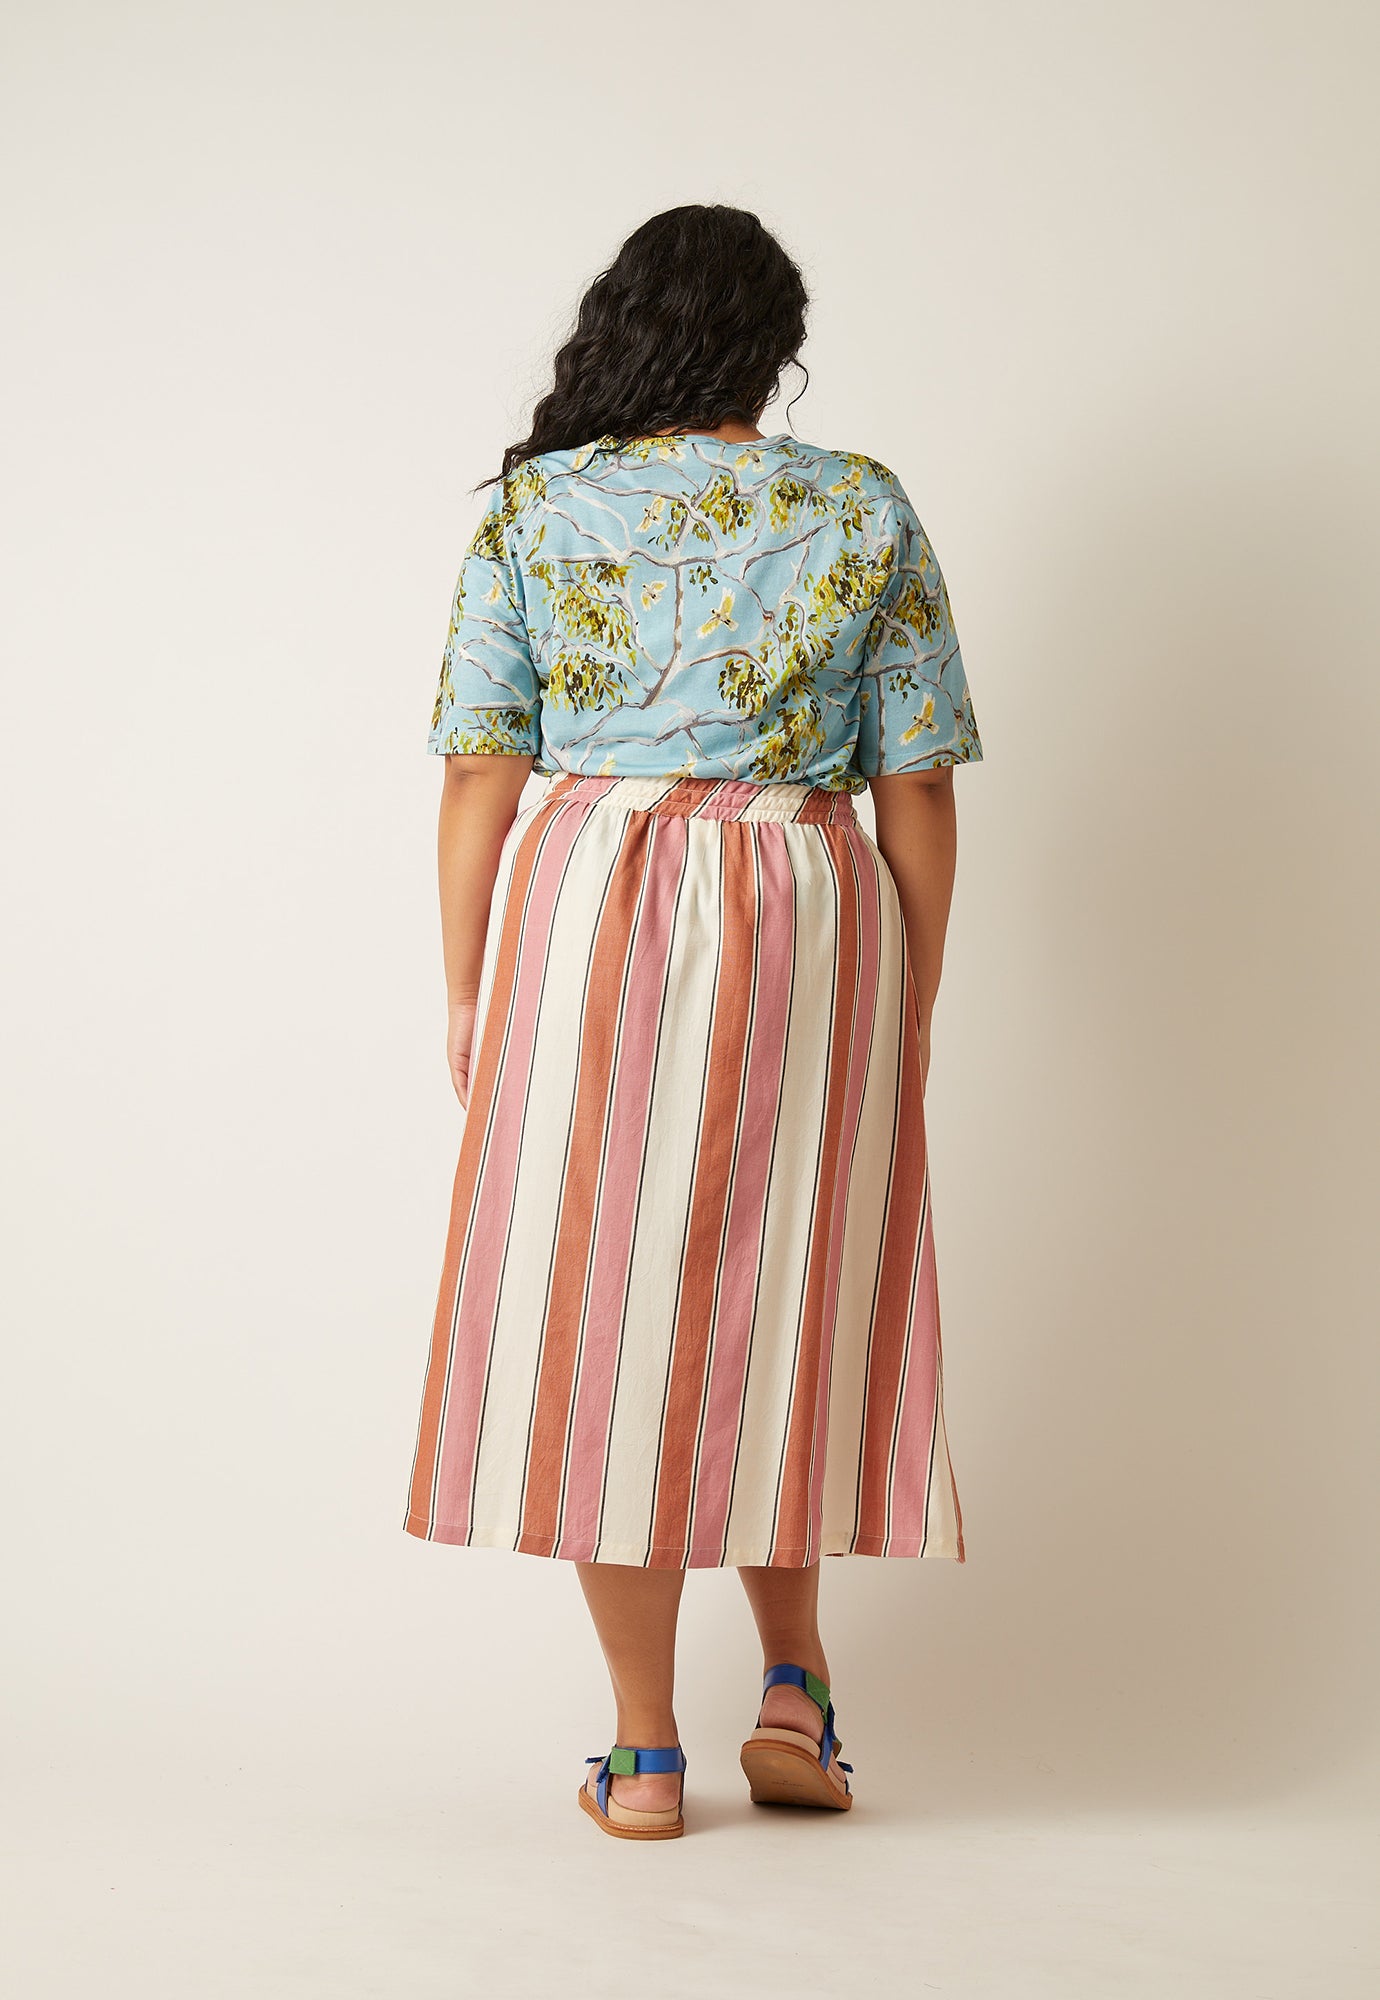 Bindi Skirt - Woven Stripe